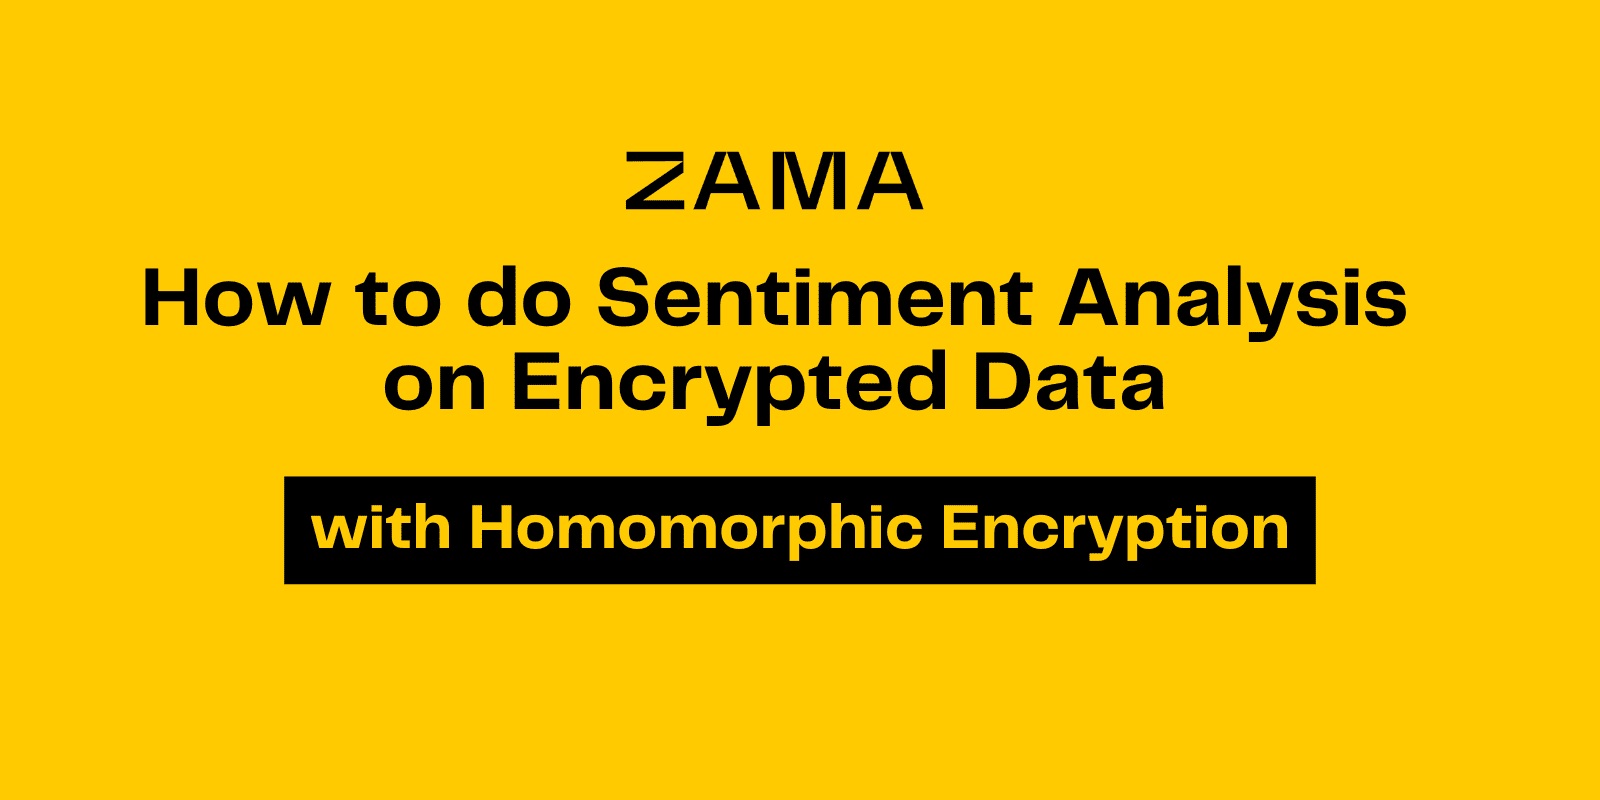 Sentiment Analysis on Encrypted Data with Homomorphic Encryption